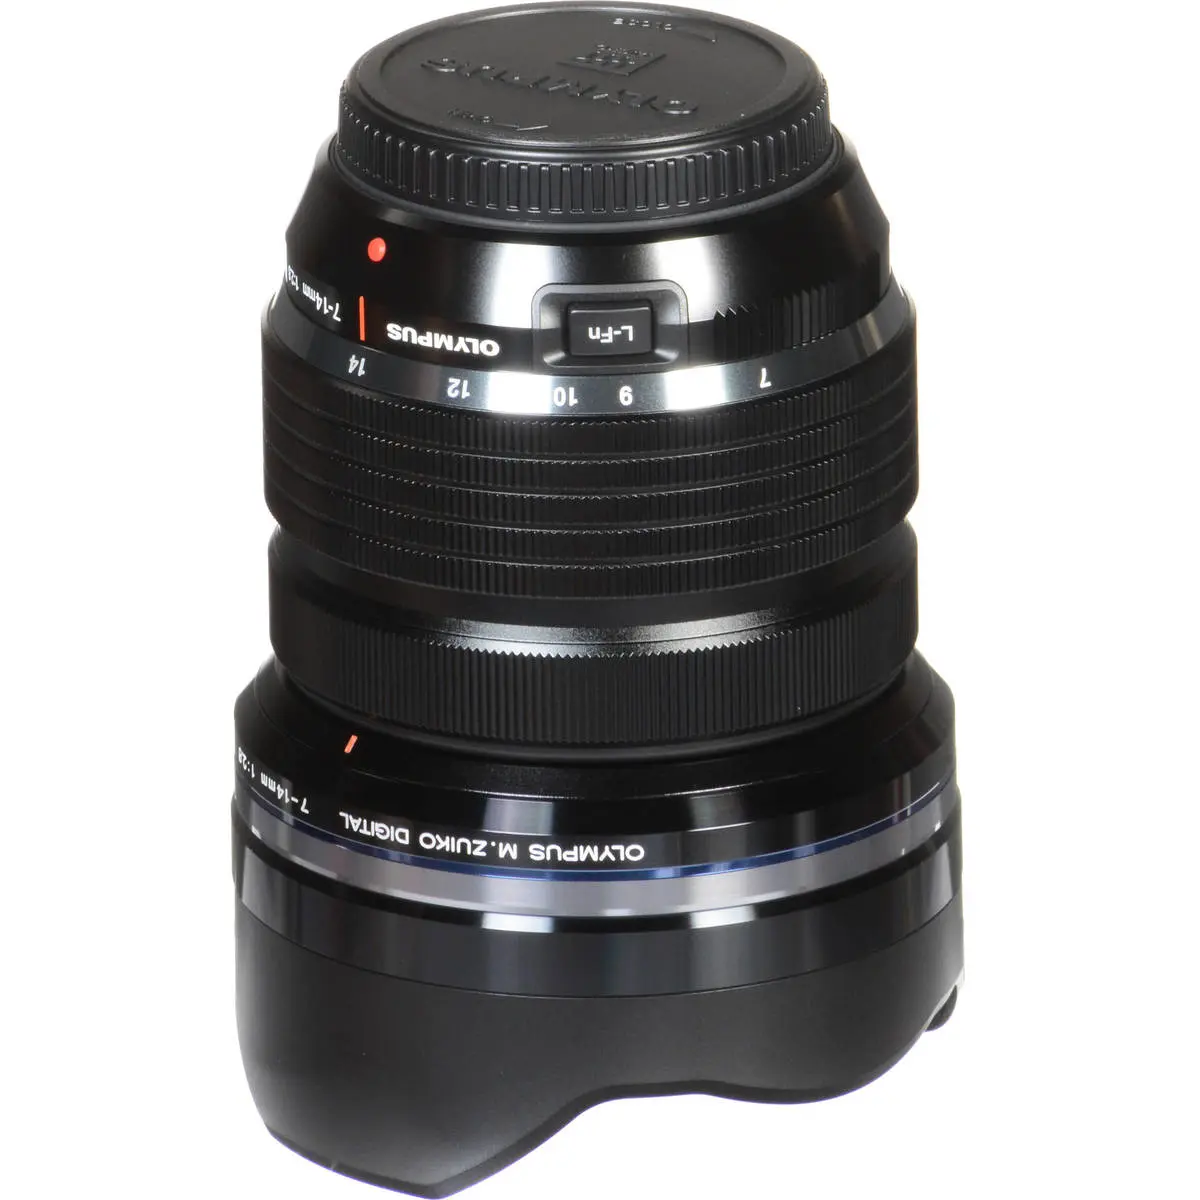 7. Olympus M.ZUIKO DIGITAL ED 7-14mm F2.8 PRO Lens